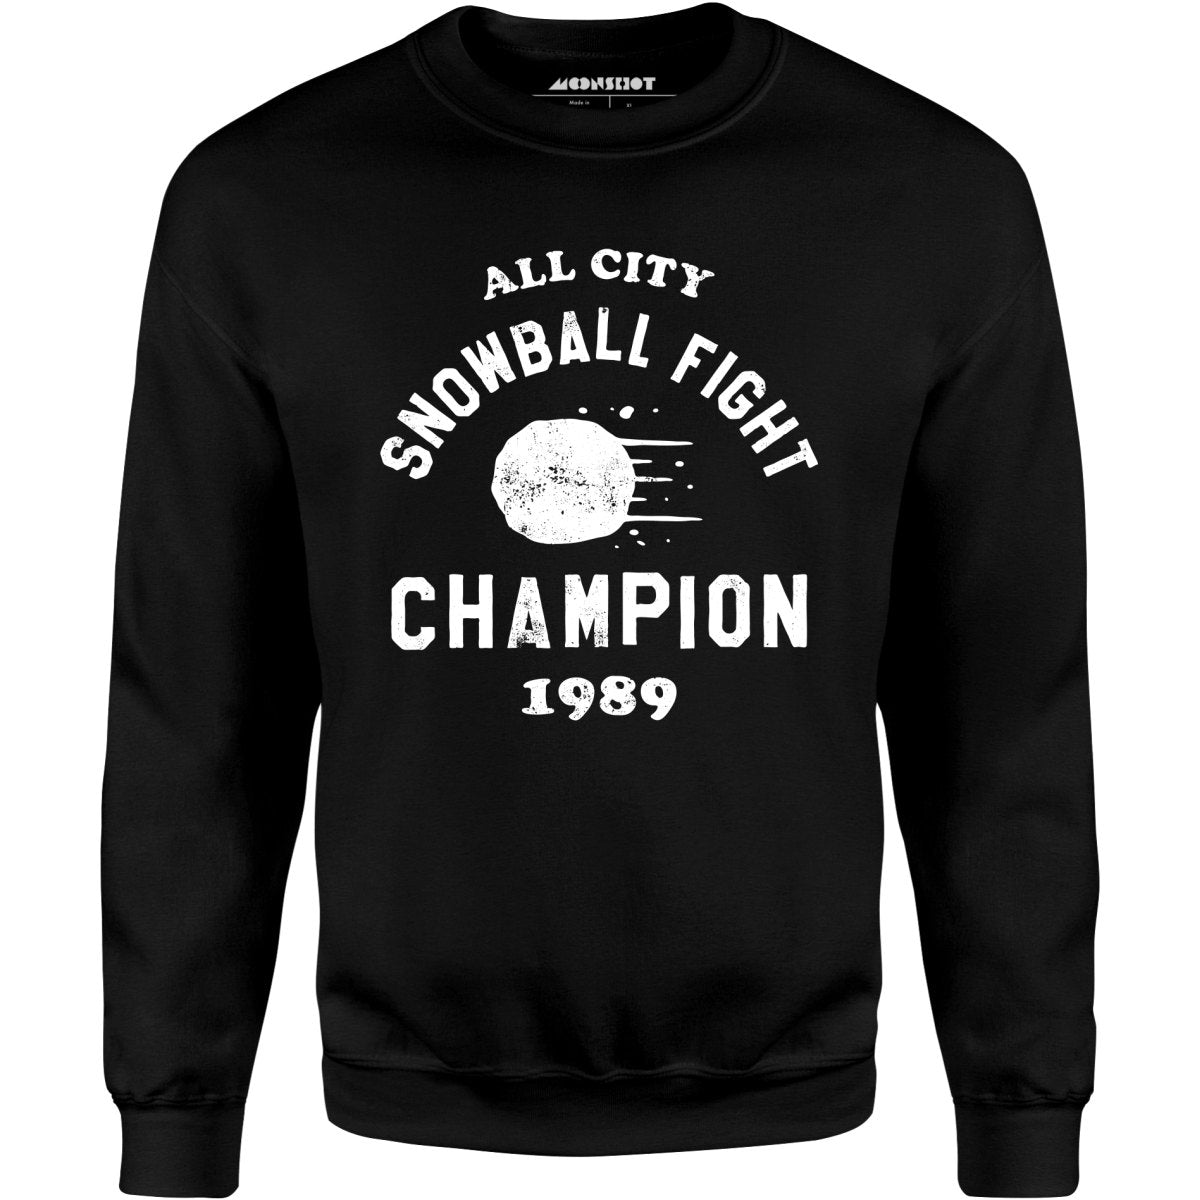 Snowball Fight Champion - Unisex Sweatshirt